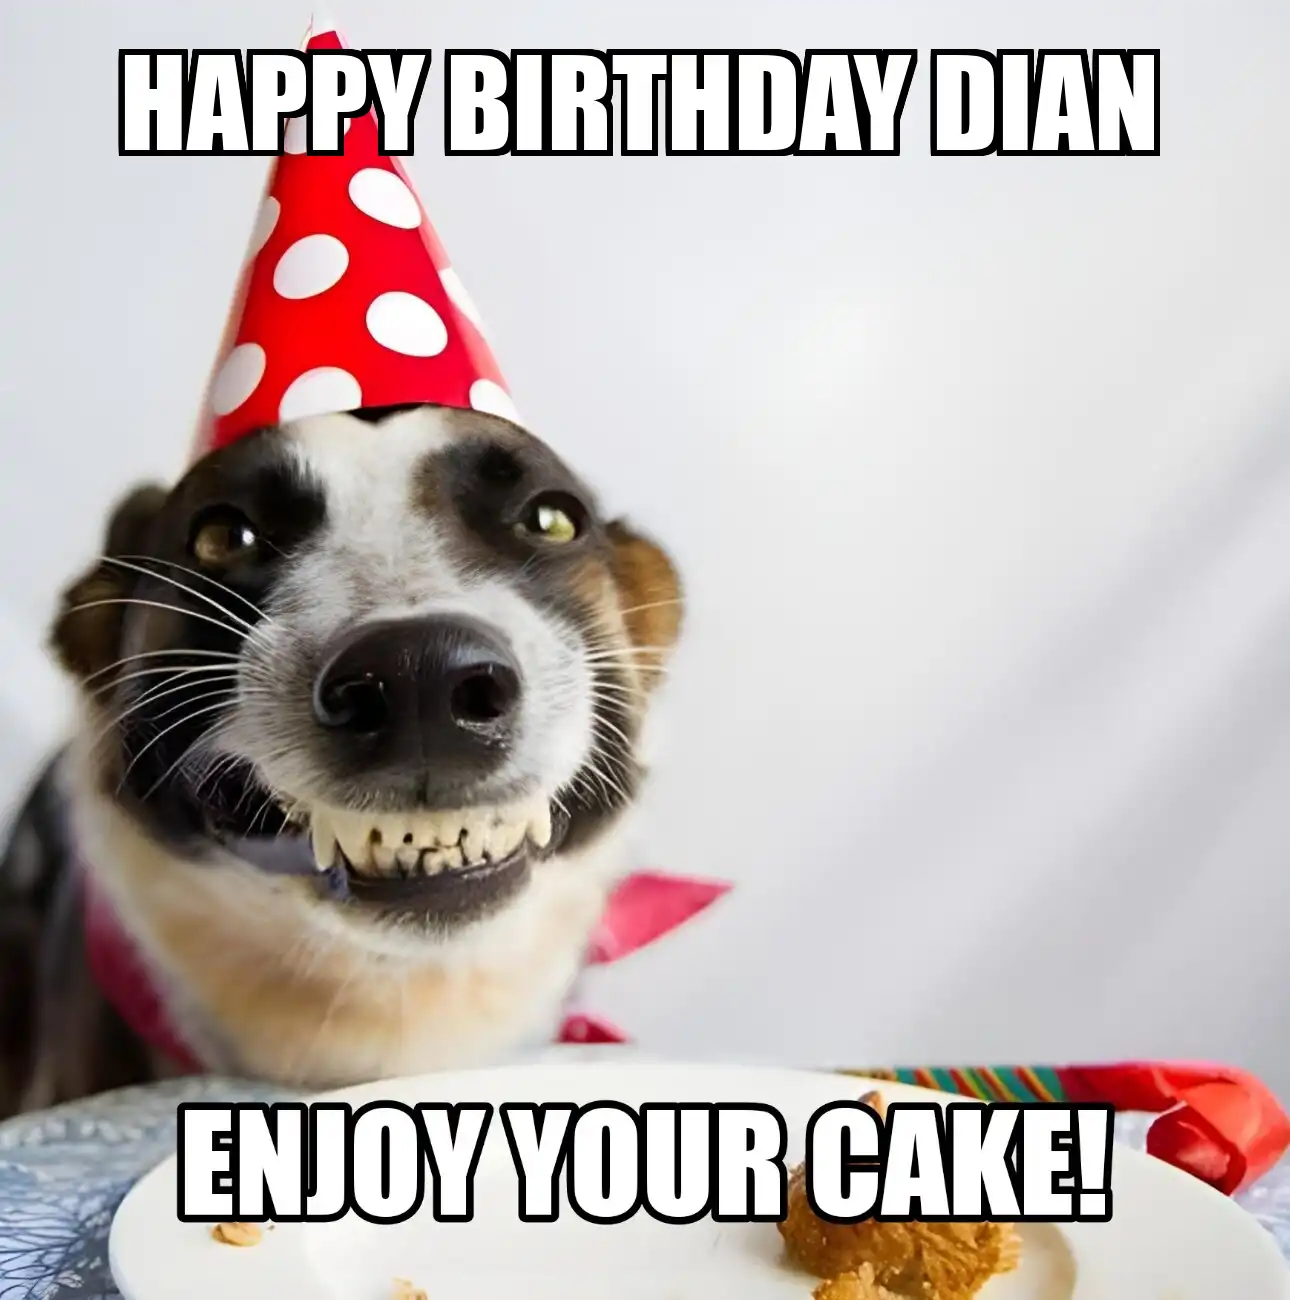 Happy Birthday Dian Enjoy Your Cake Dog Meme